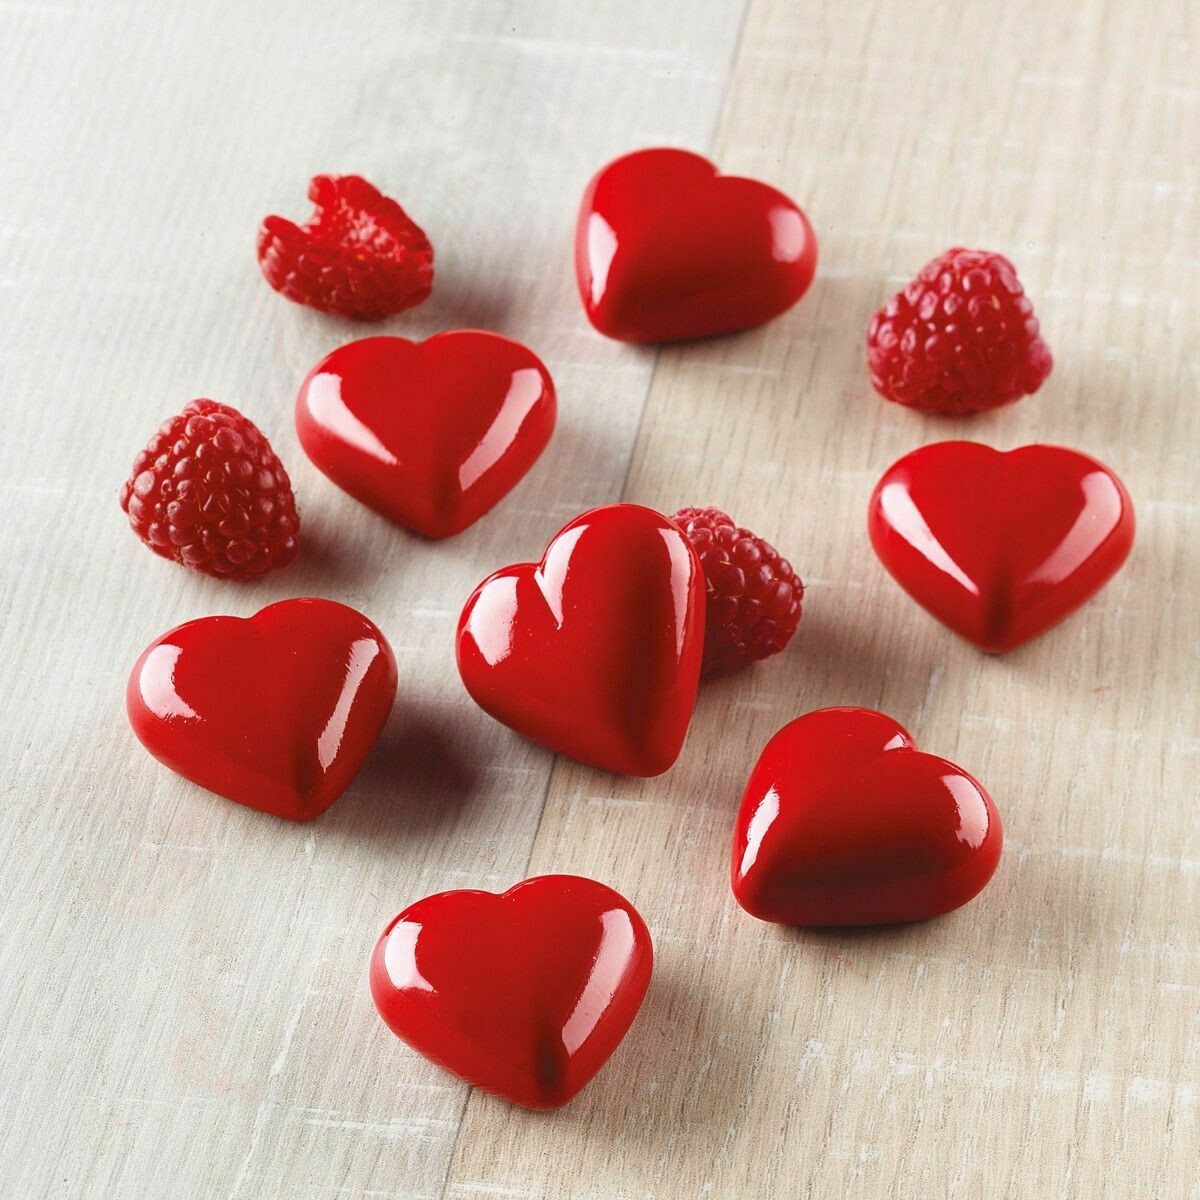 Silikomart Chocolate Mould 'My Love' - Καλούπι σιλικόνης για 12 σοκολατένιες καρδιές